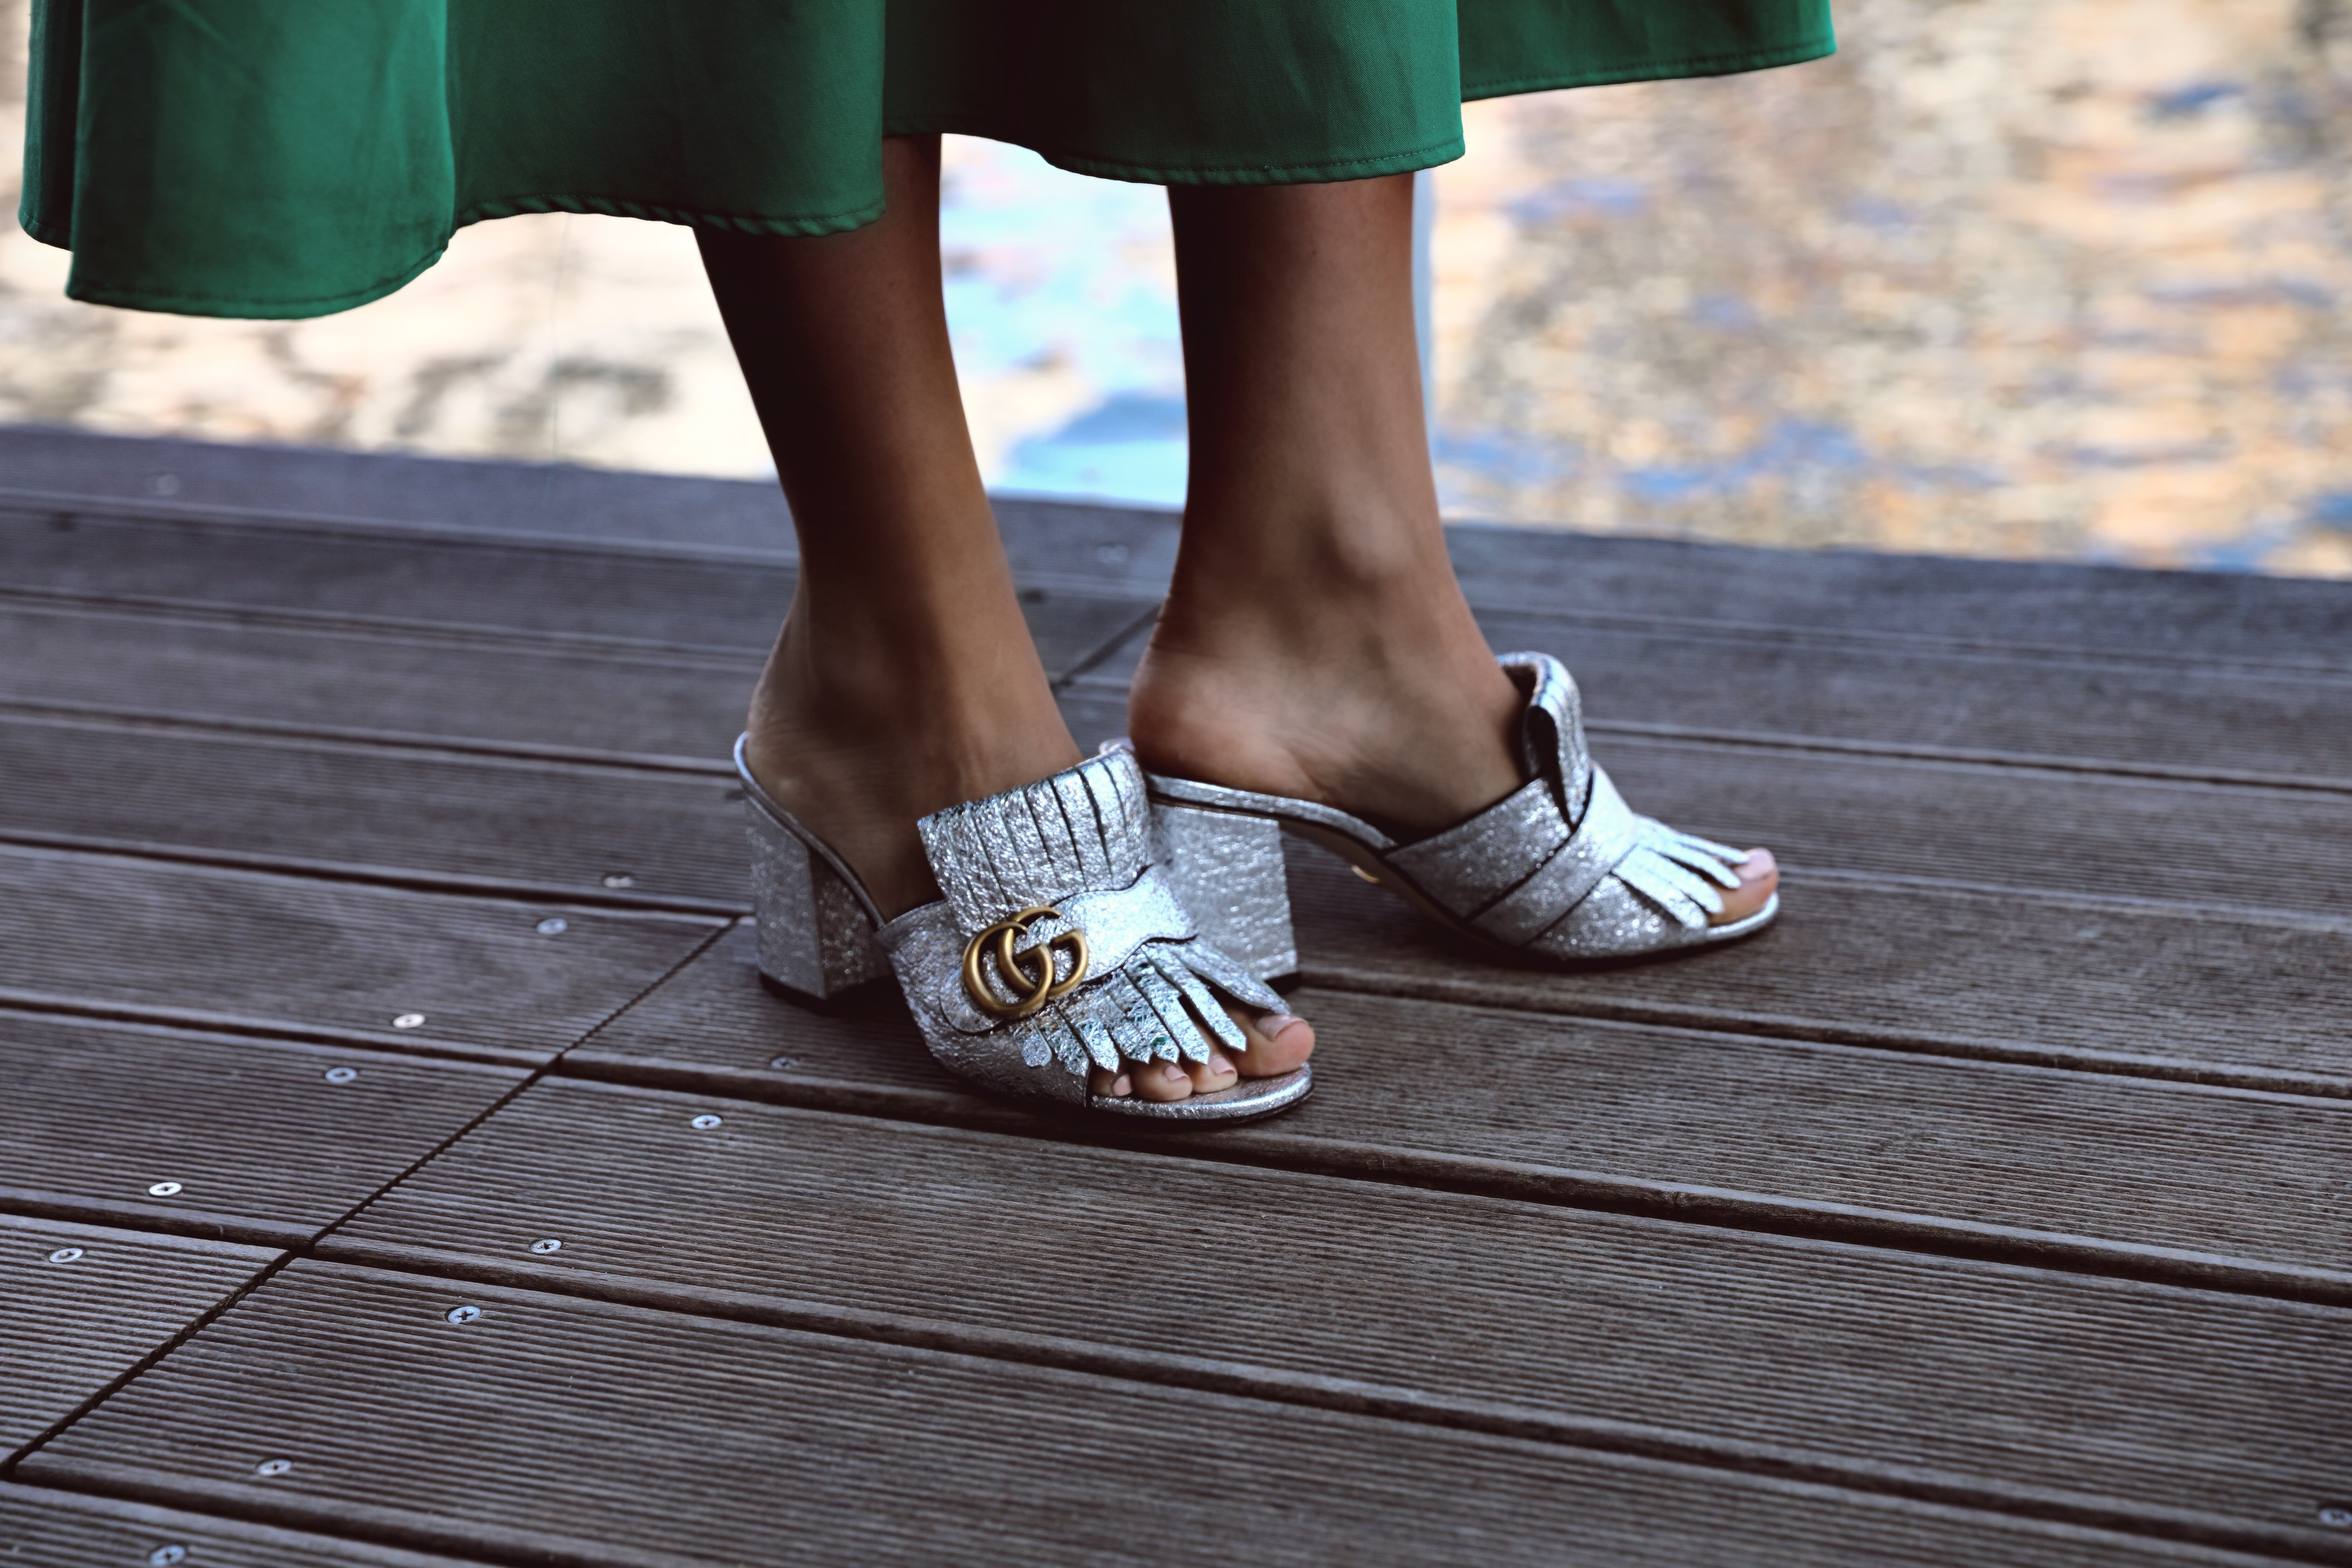 gucci heels silver